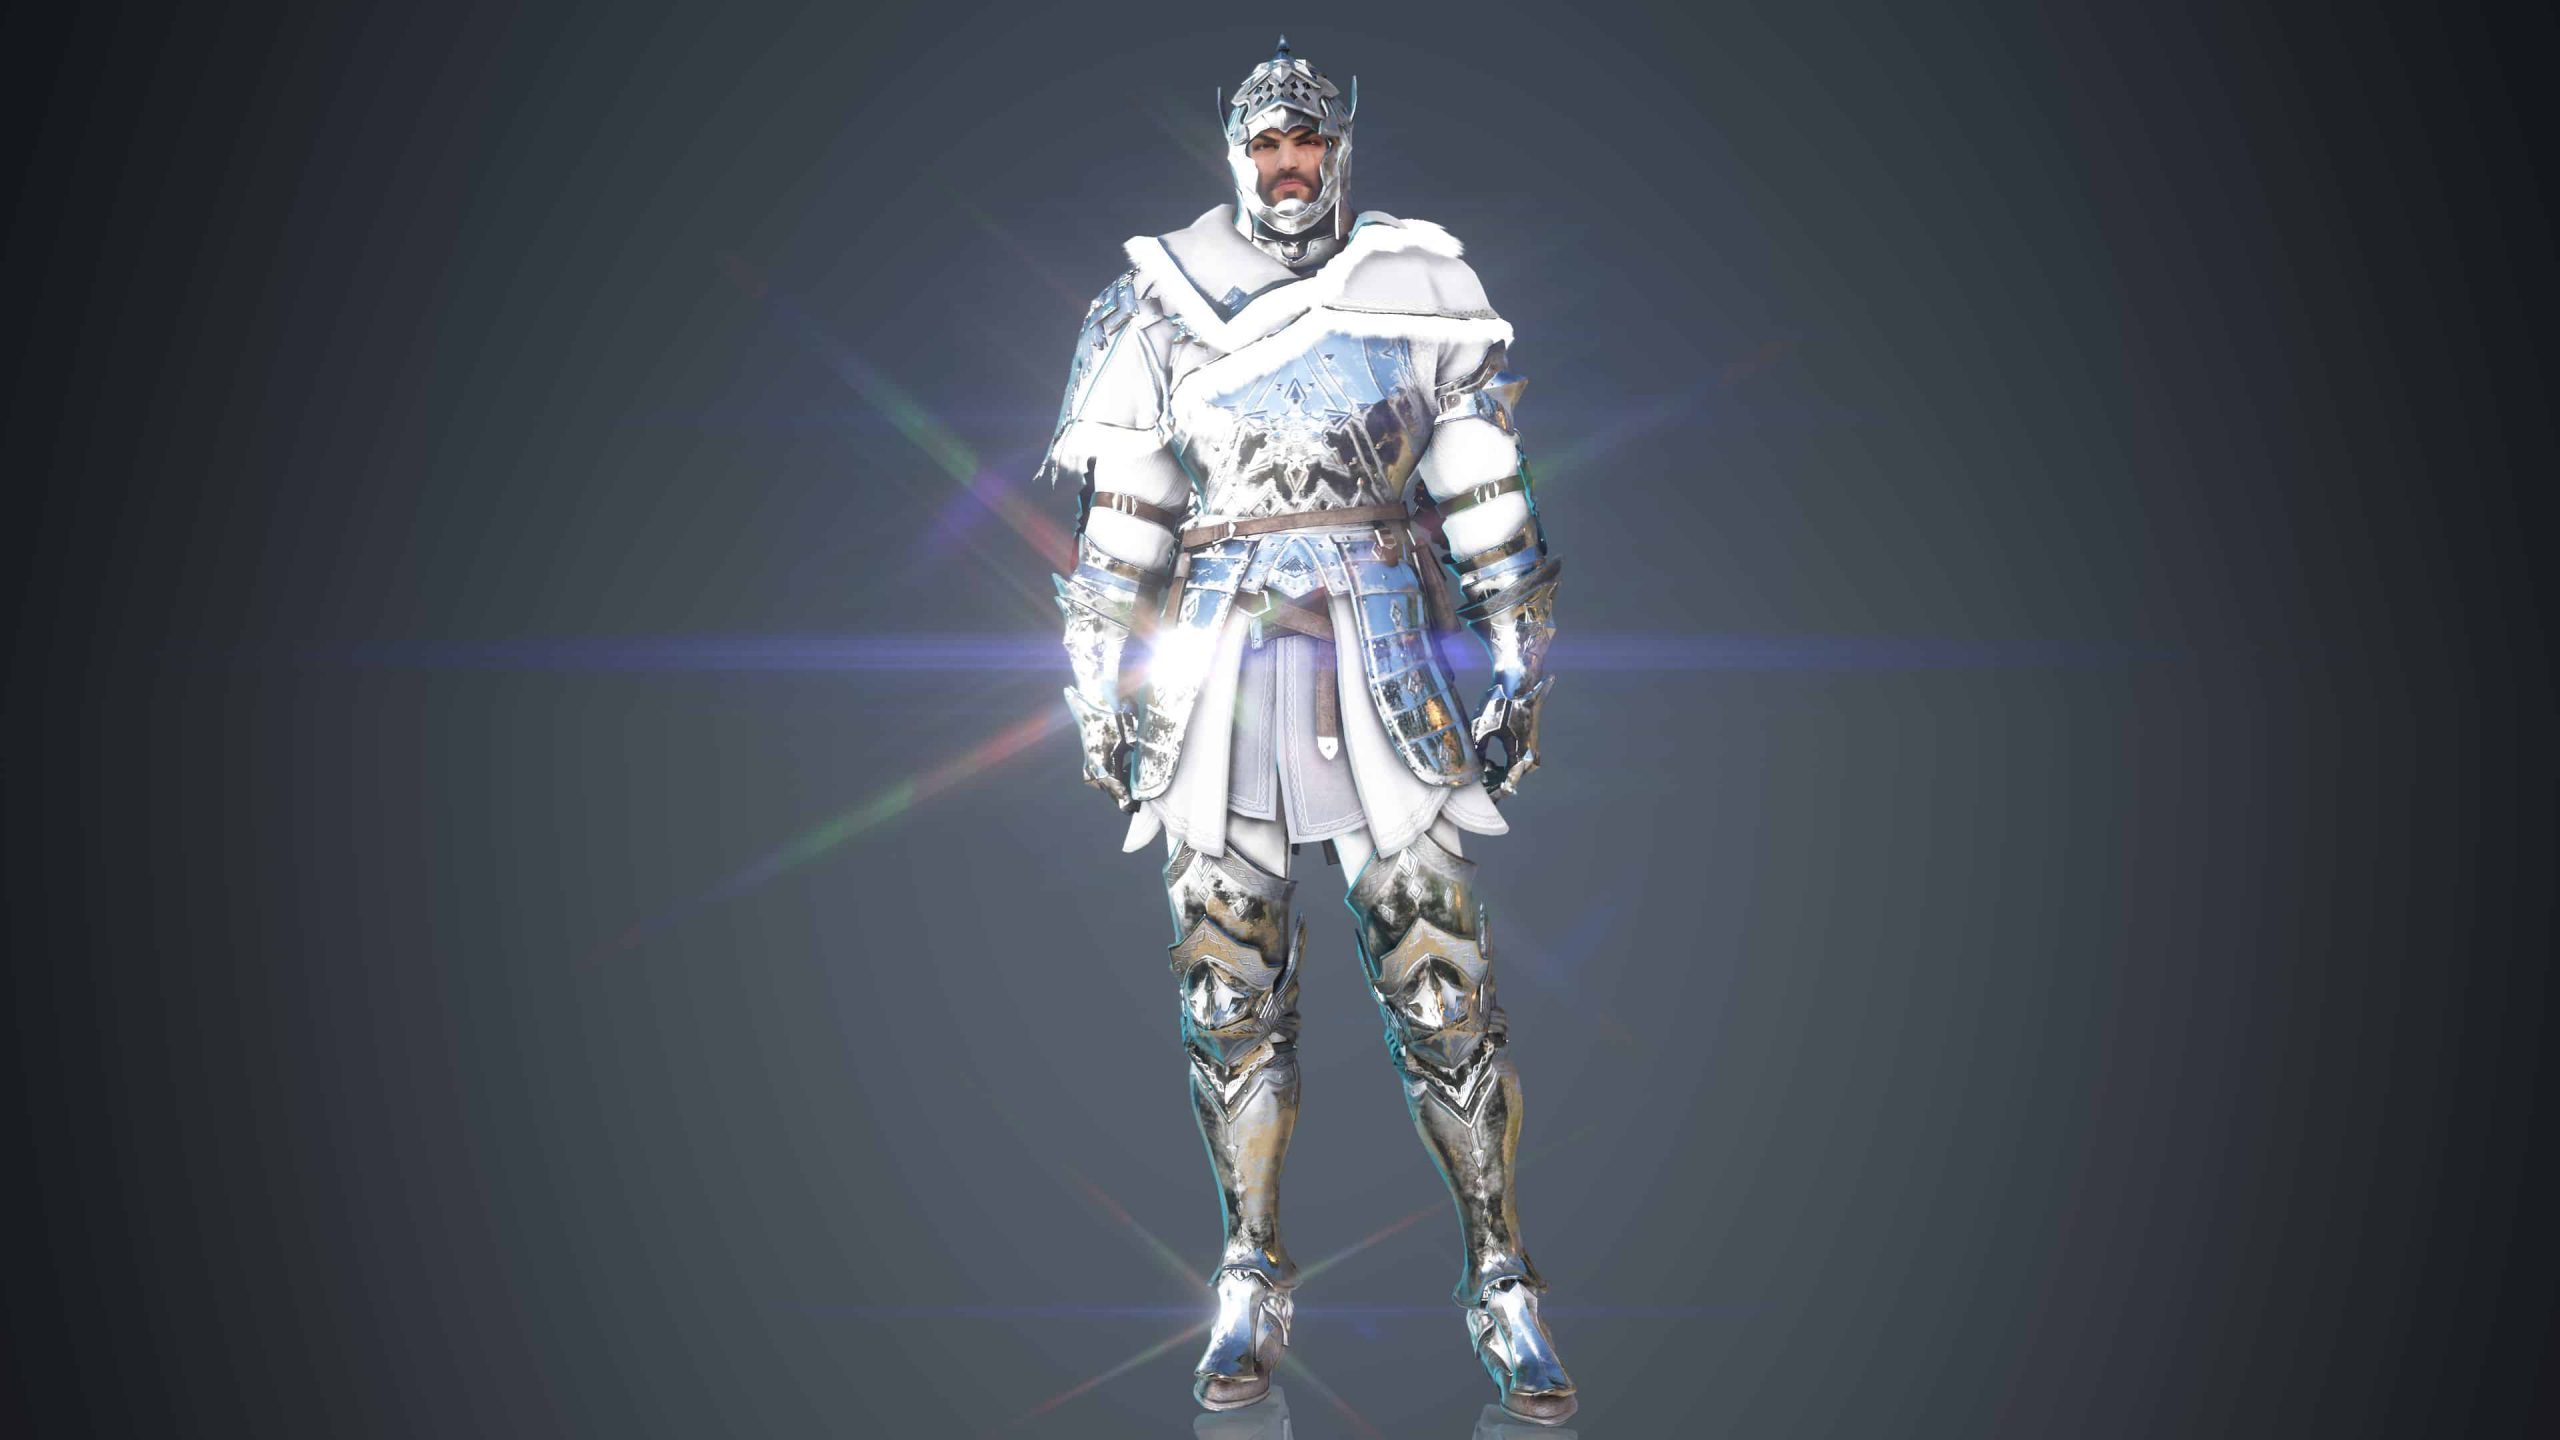 warrior-frostbite-outfit-set-bdo-6429387